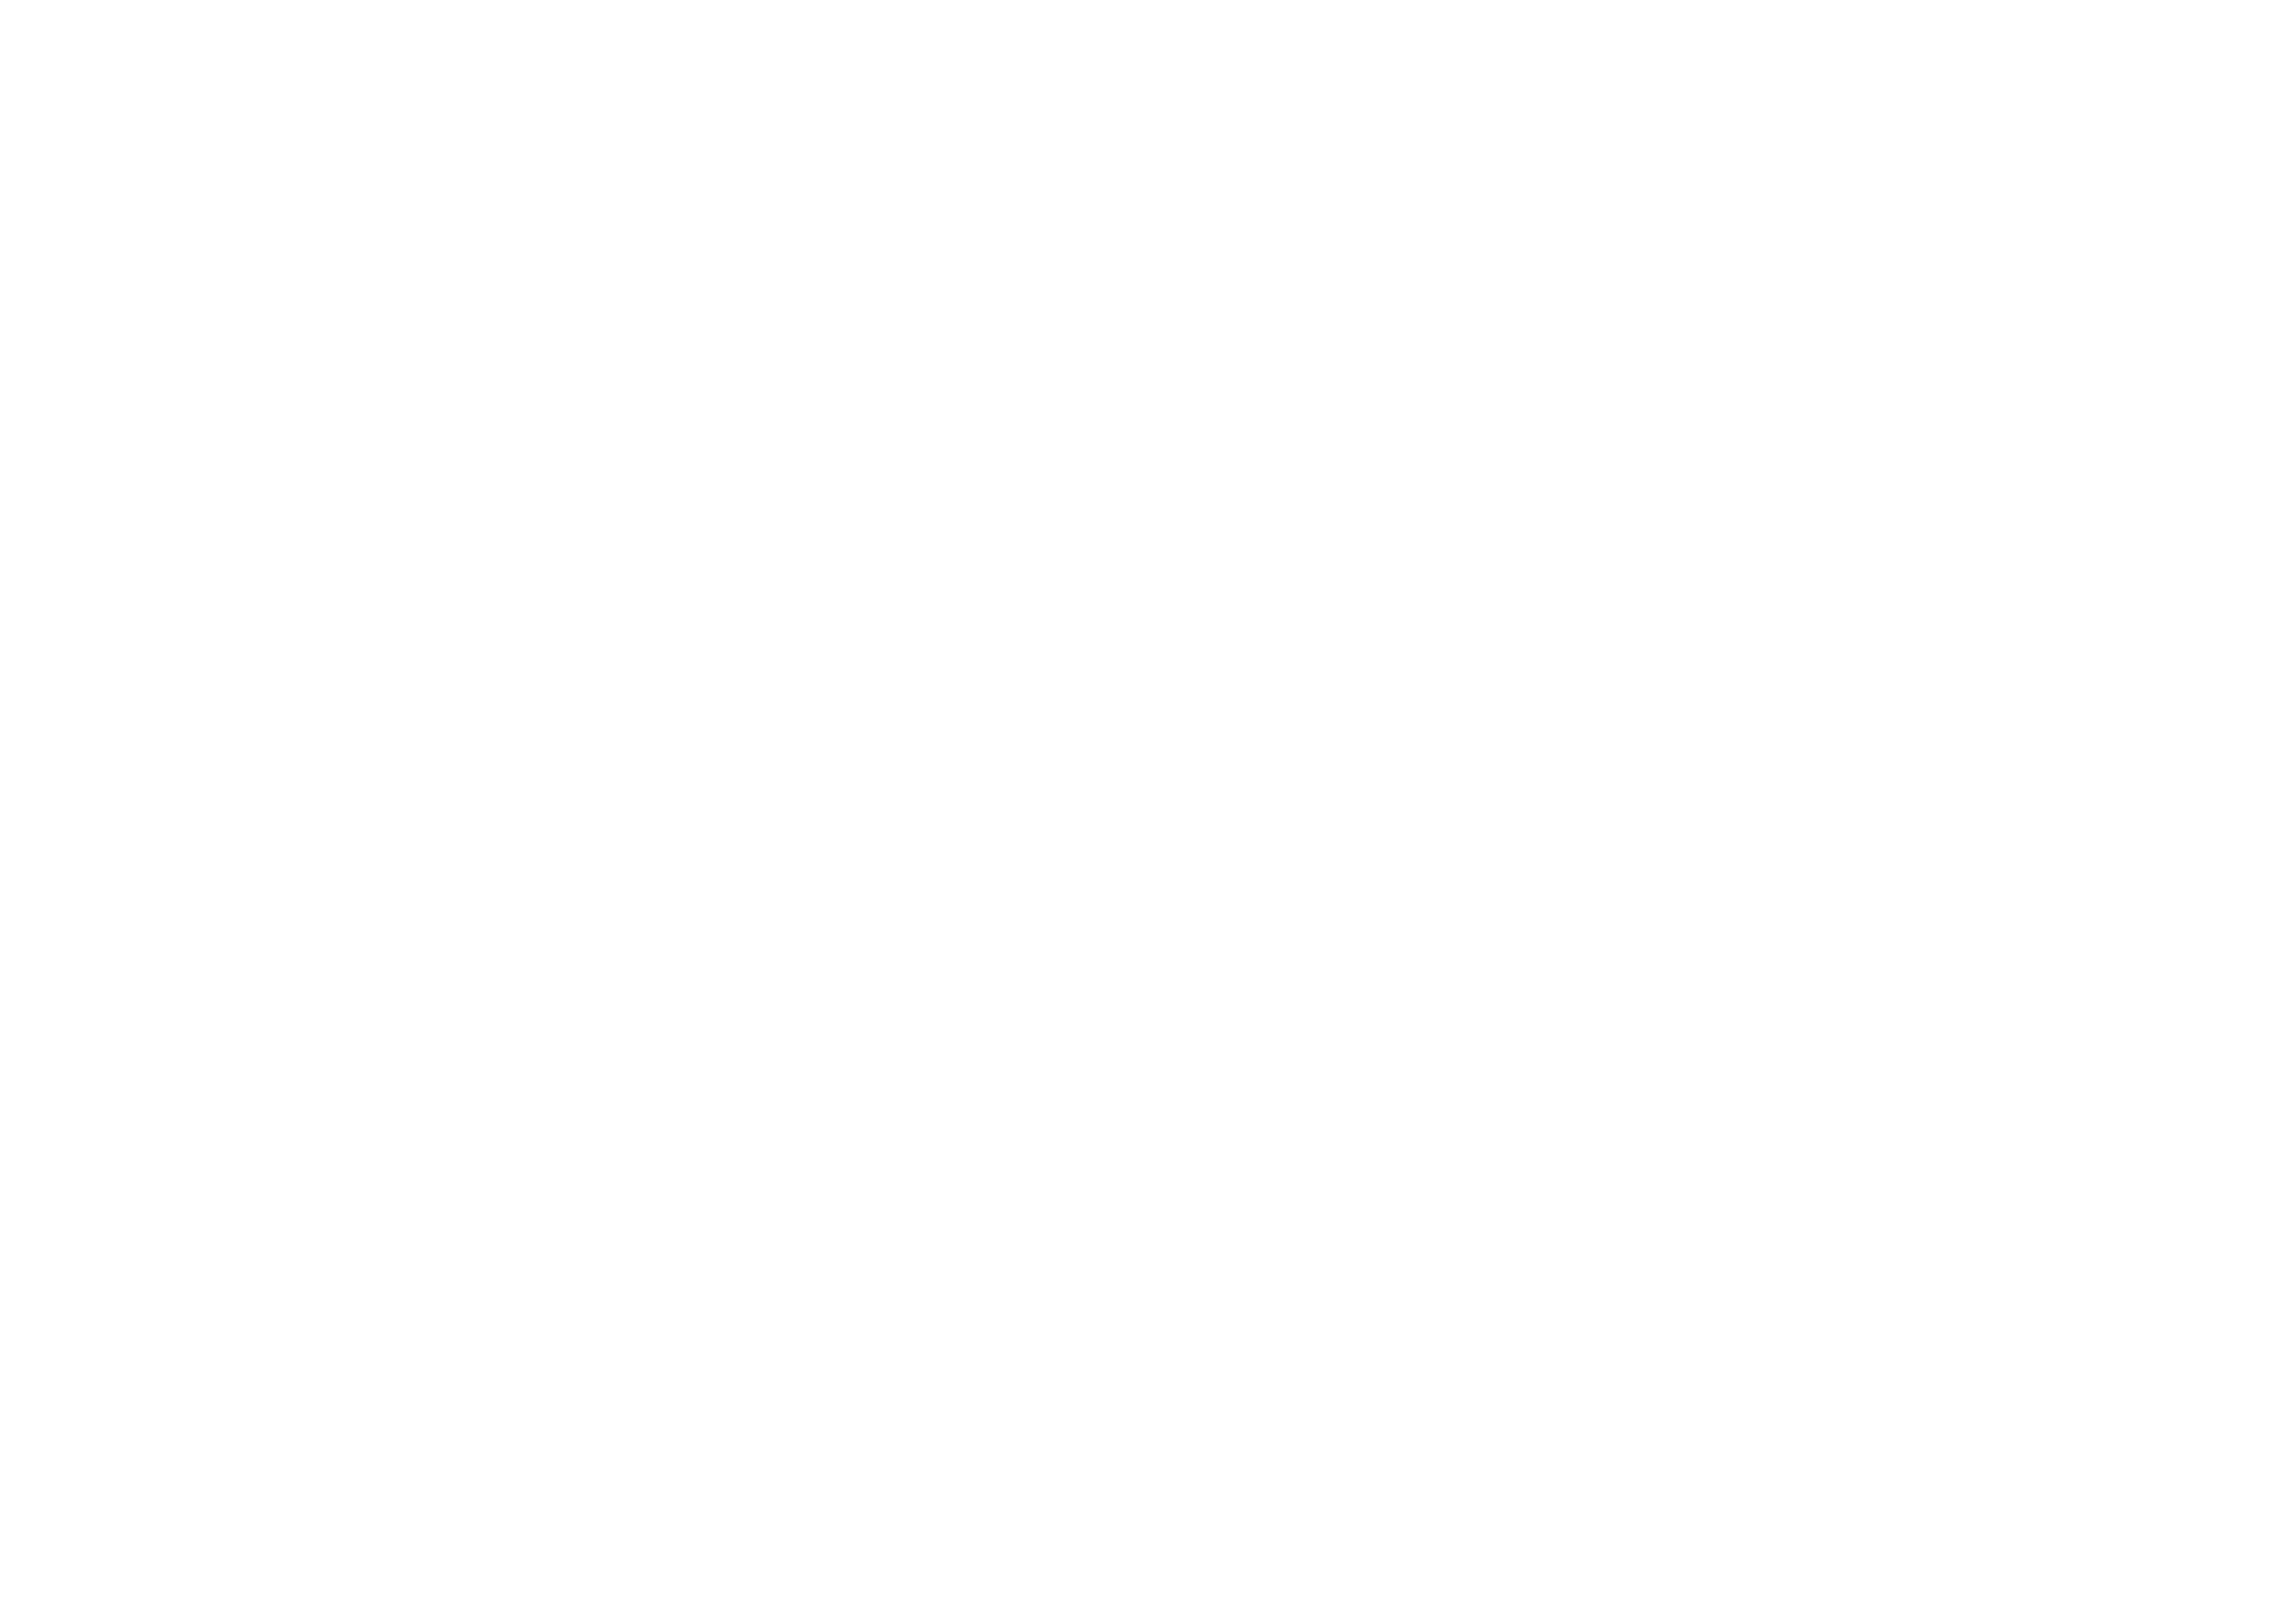 DR Art